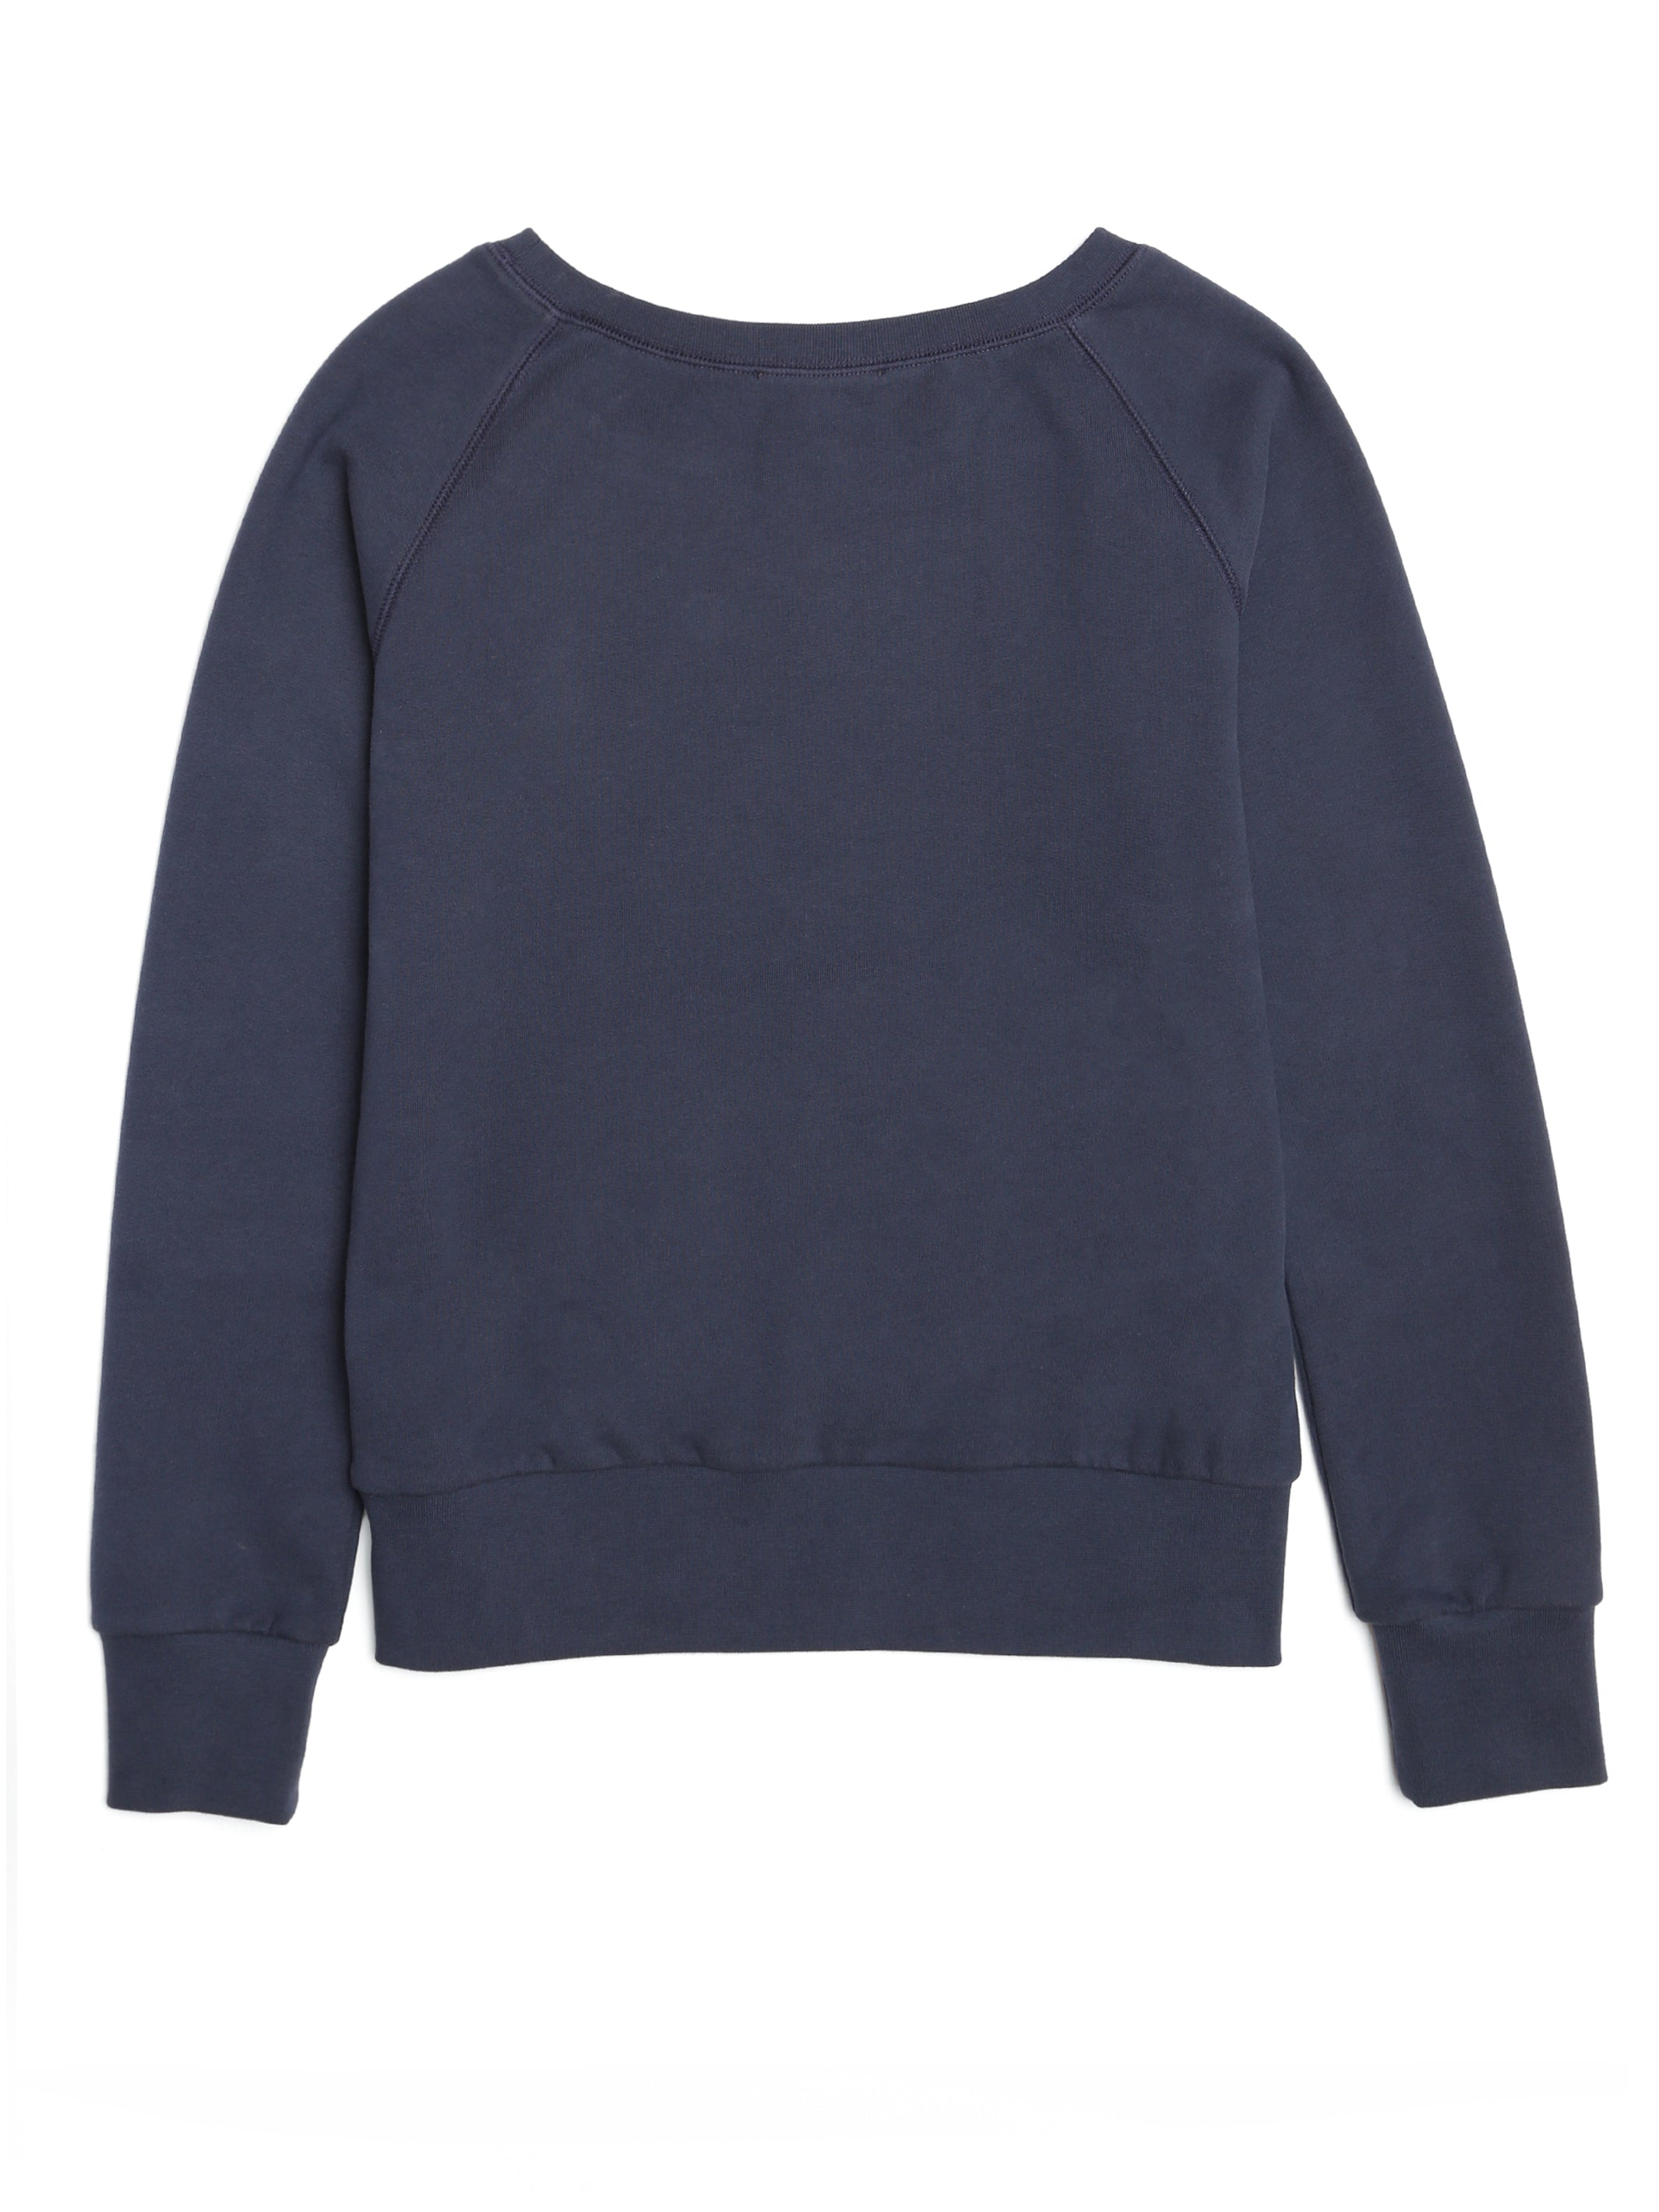 CHGBMOK Womens Casual 1/4 Zip Collar Sweatshirt Long Sleeve Solid